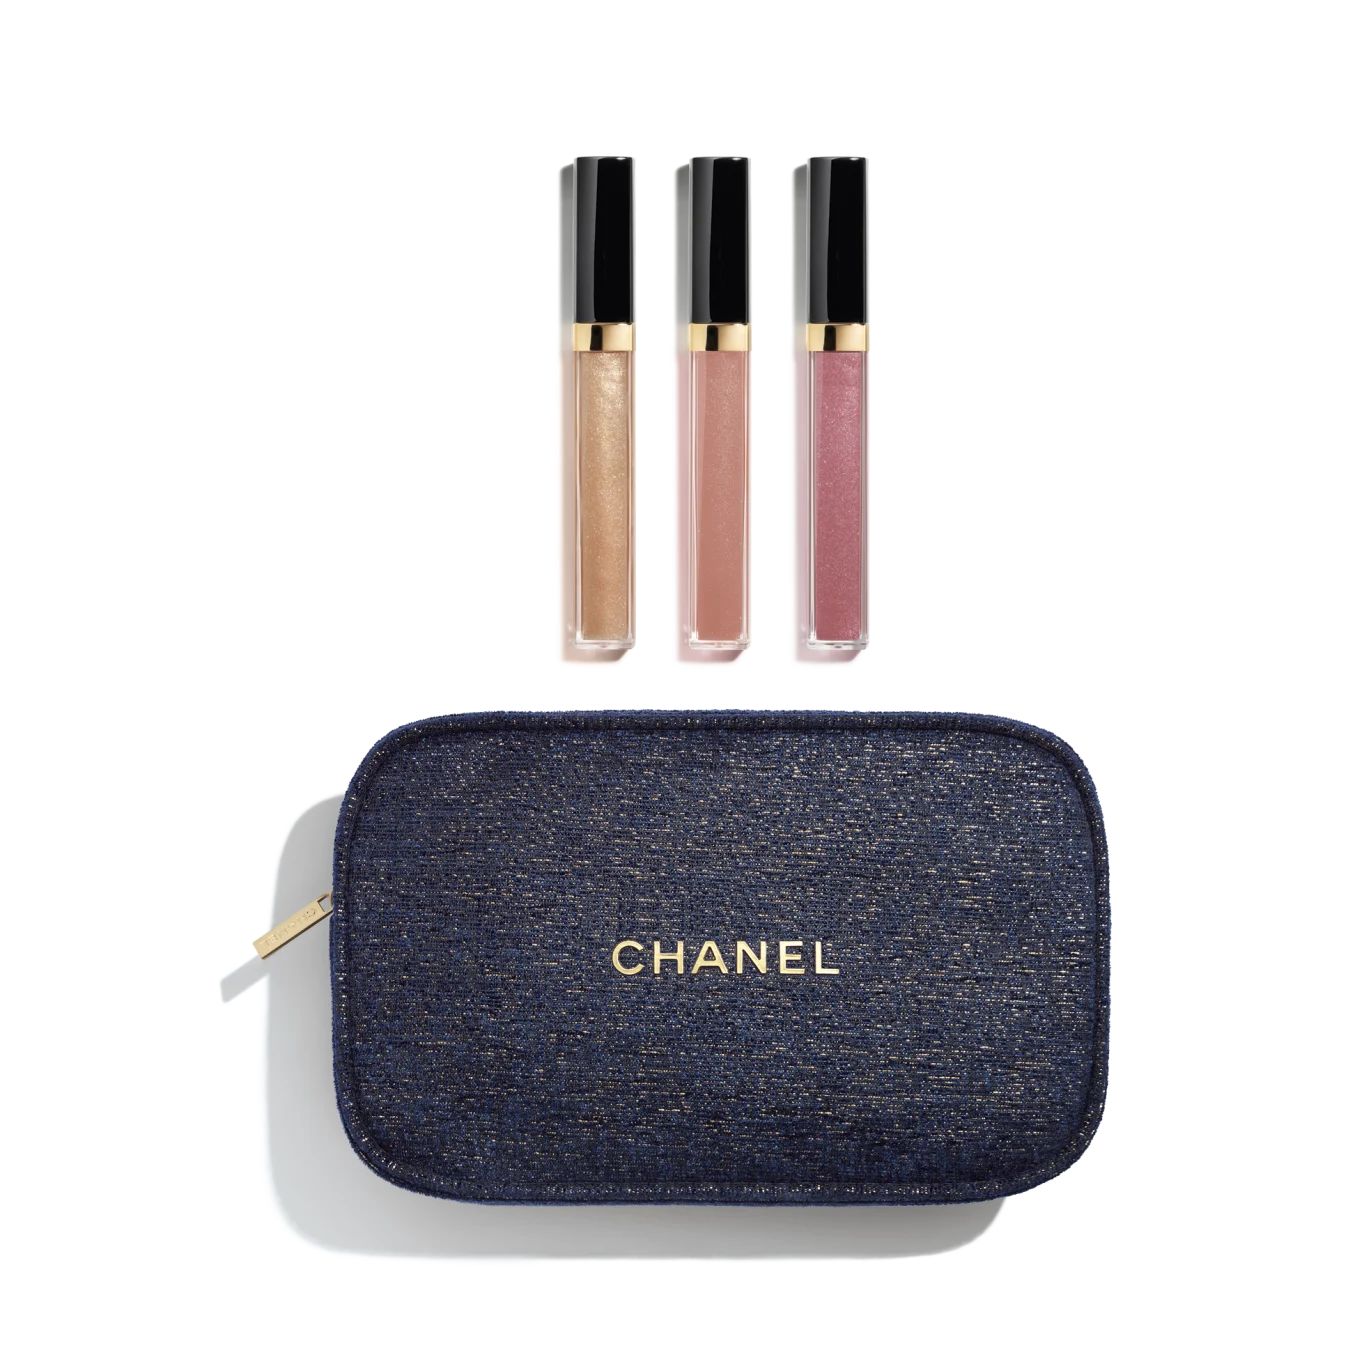 ALWAYS BRILLIANT | Chanel, Inc. (US)